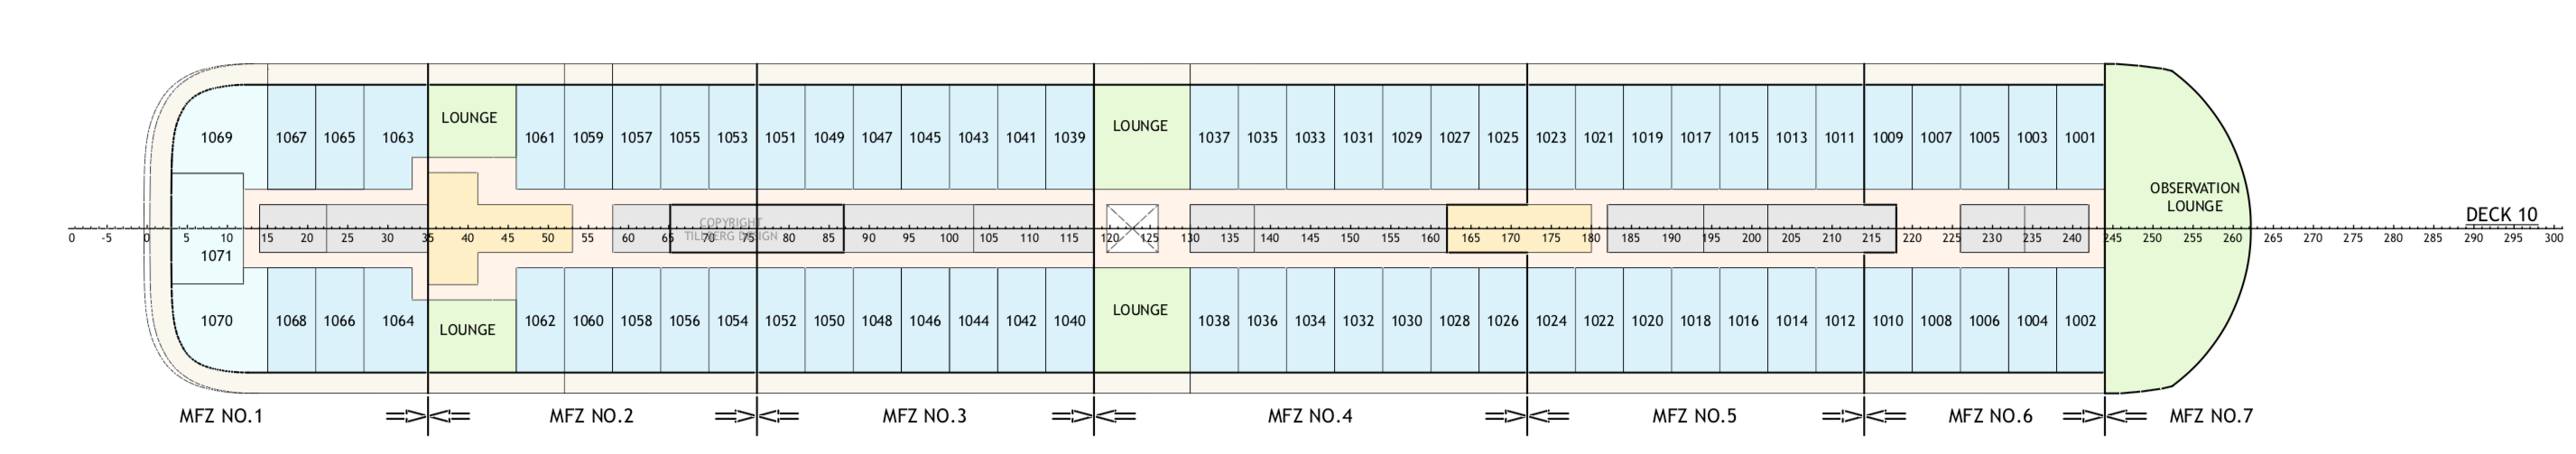 Deck 10 layout of condo ship MV Narrative